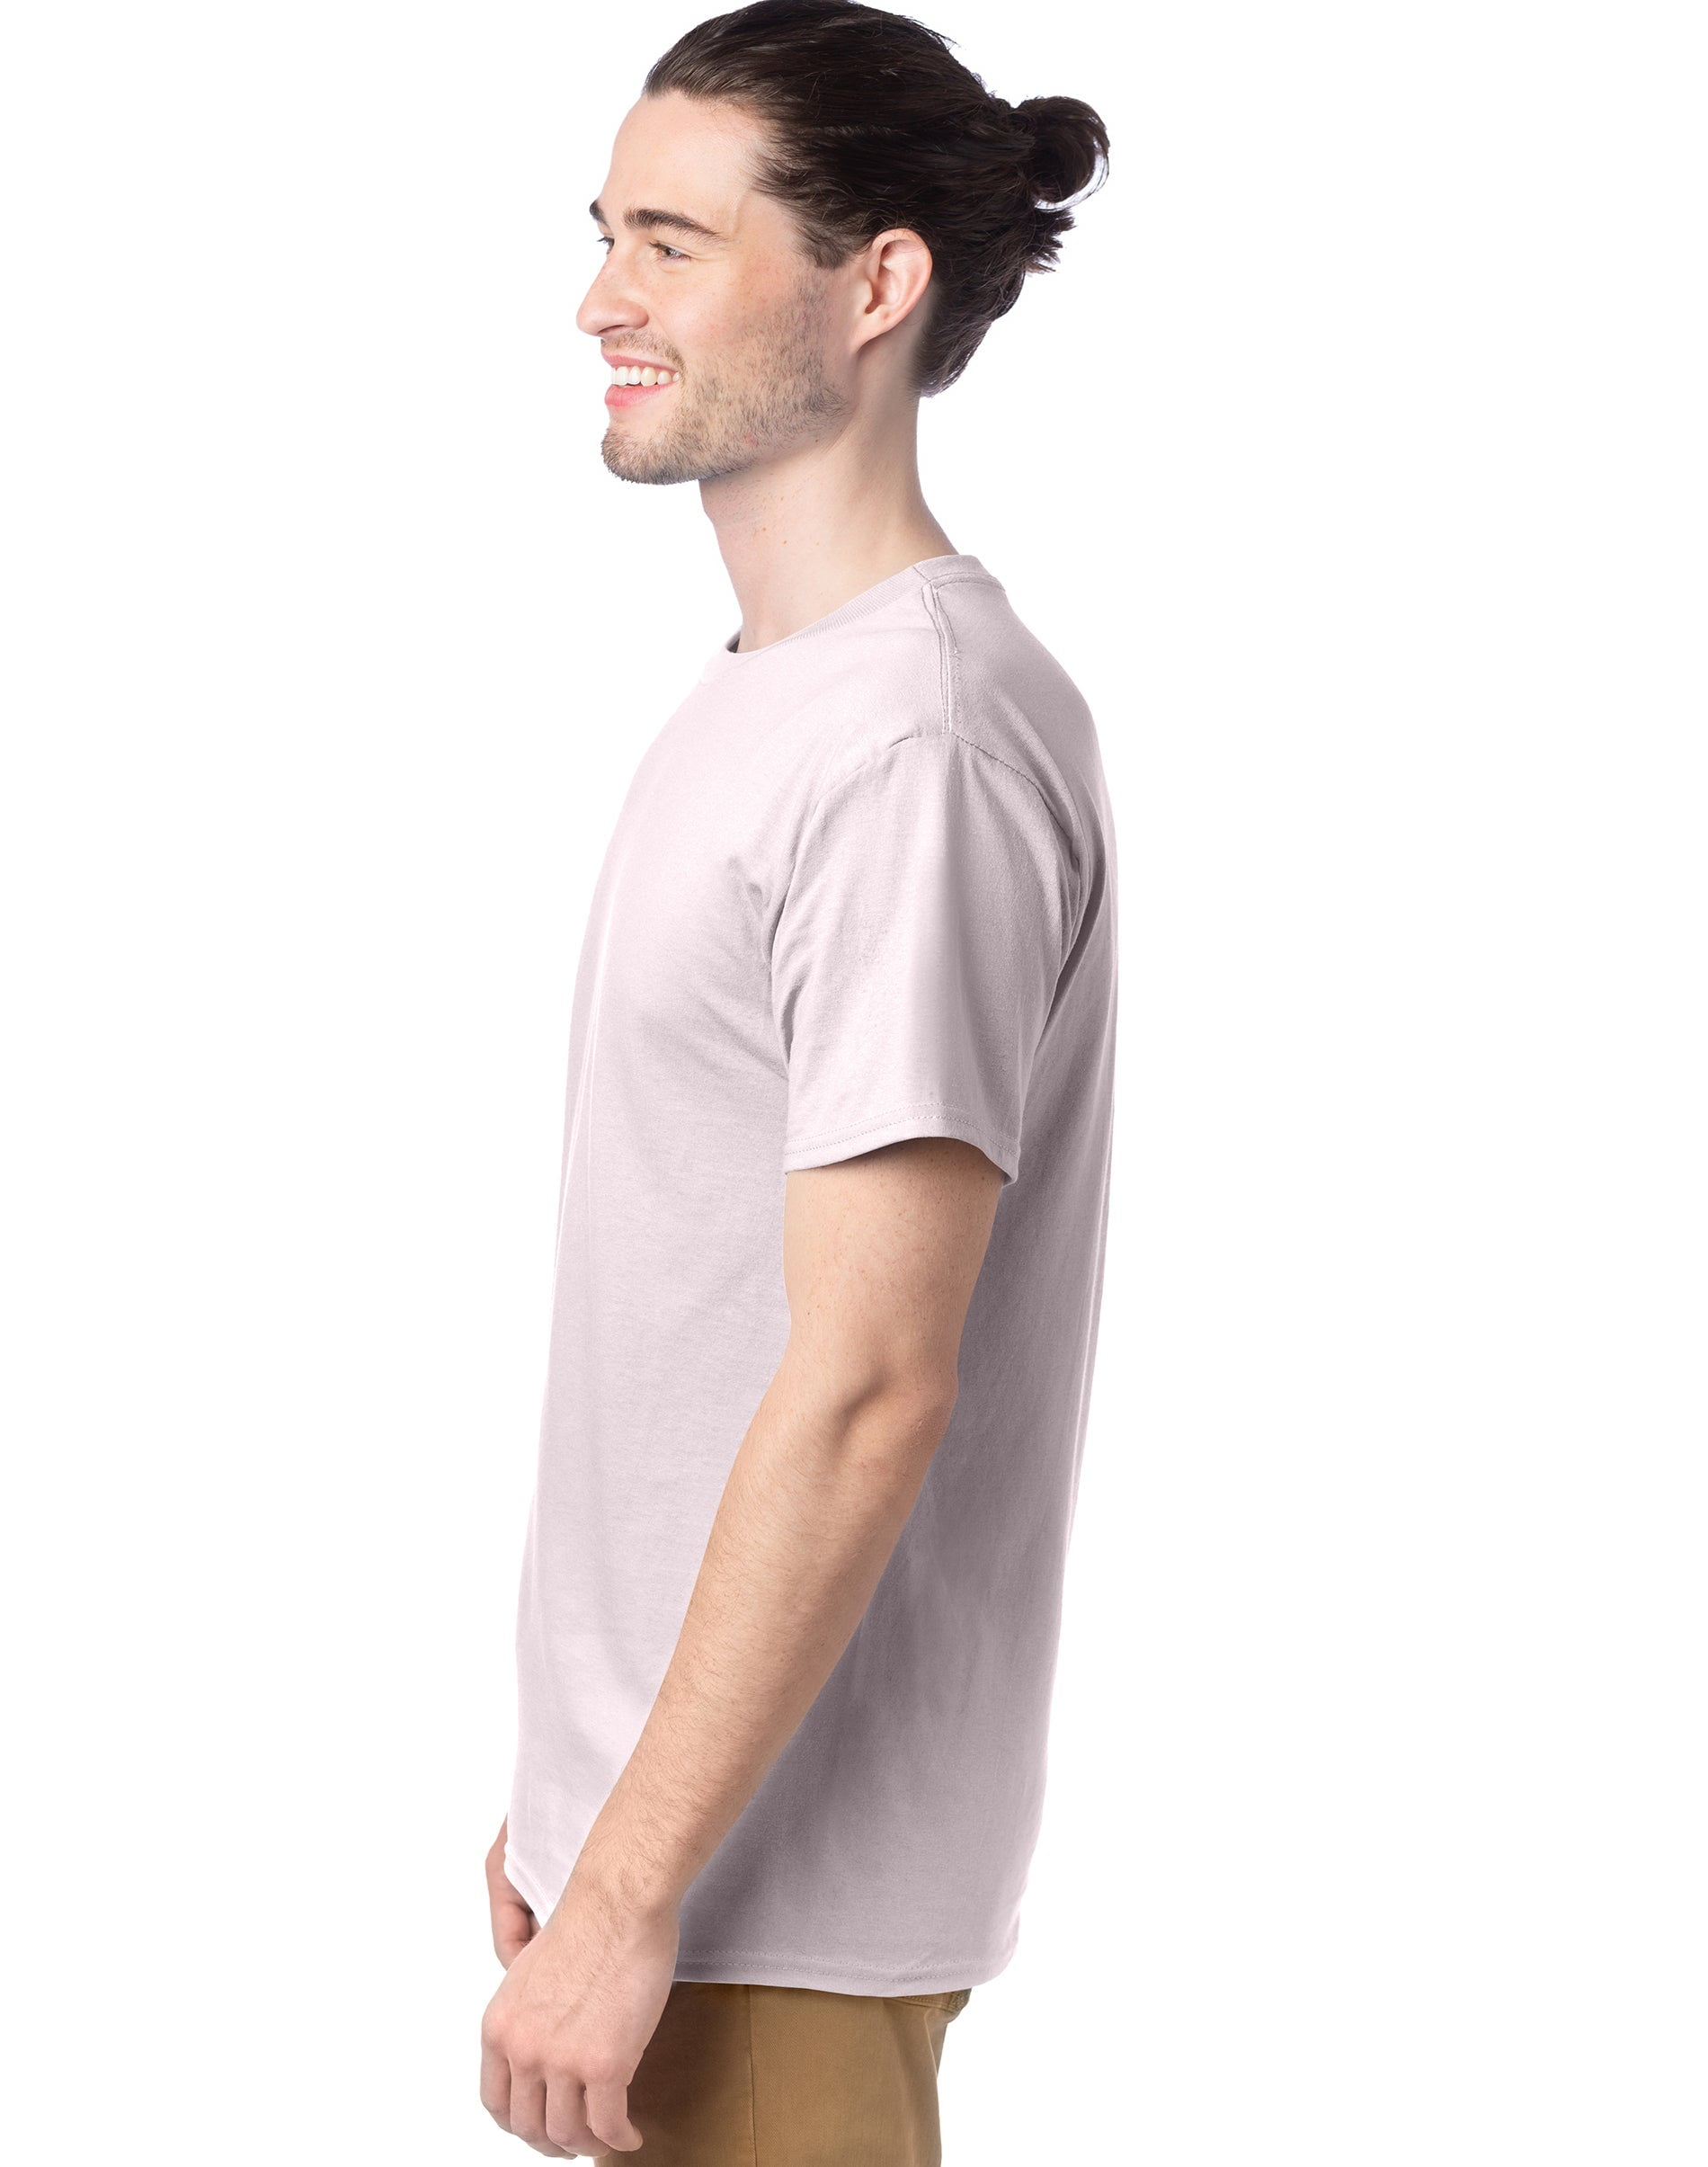 H4X Short Sleeve T-Shirt Mens Size Medium White Cotton